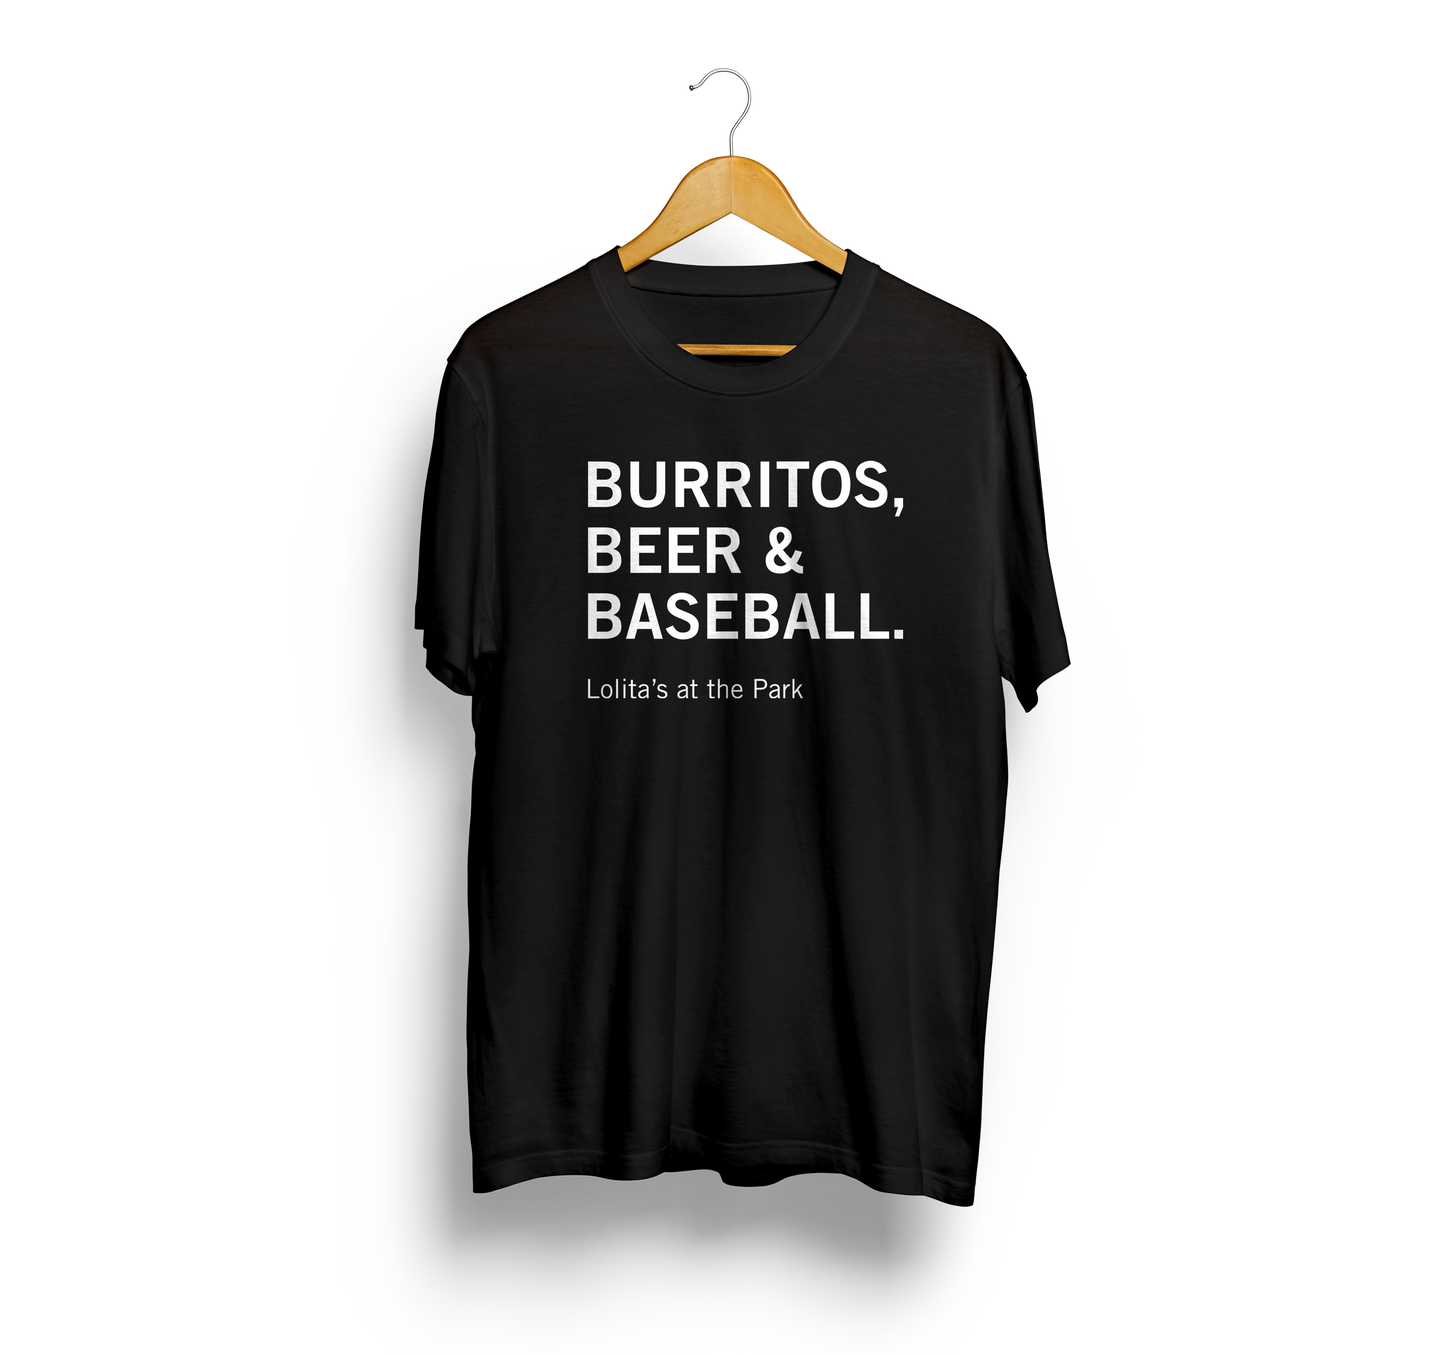 Burritos, Beer & Baseball.